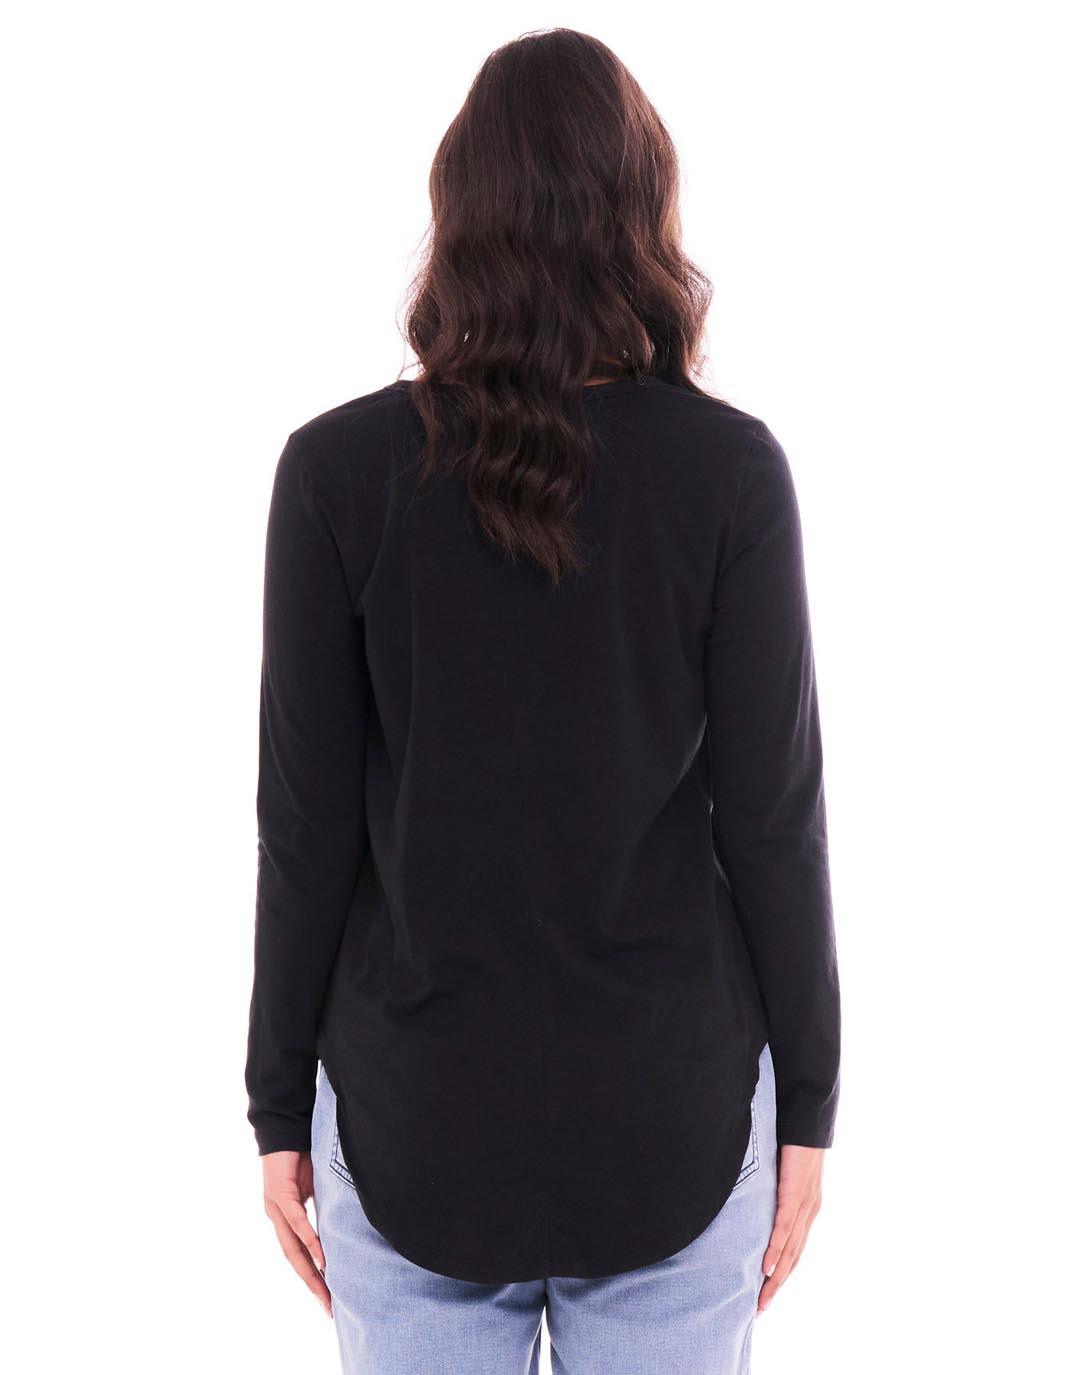 Buy Megan Long Sleeve Top - Black Betty Basics for Sale Online ...